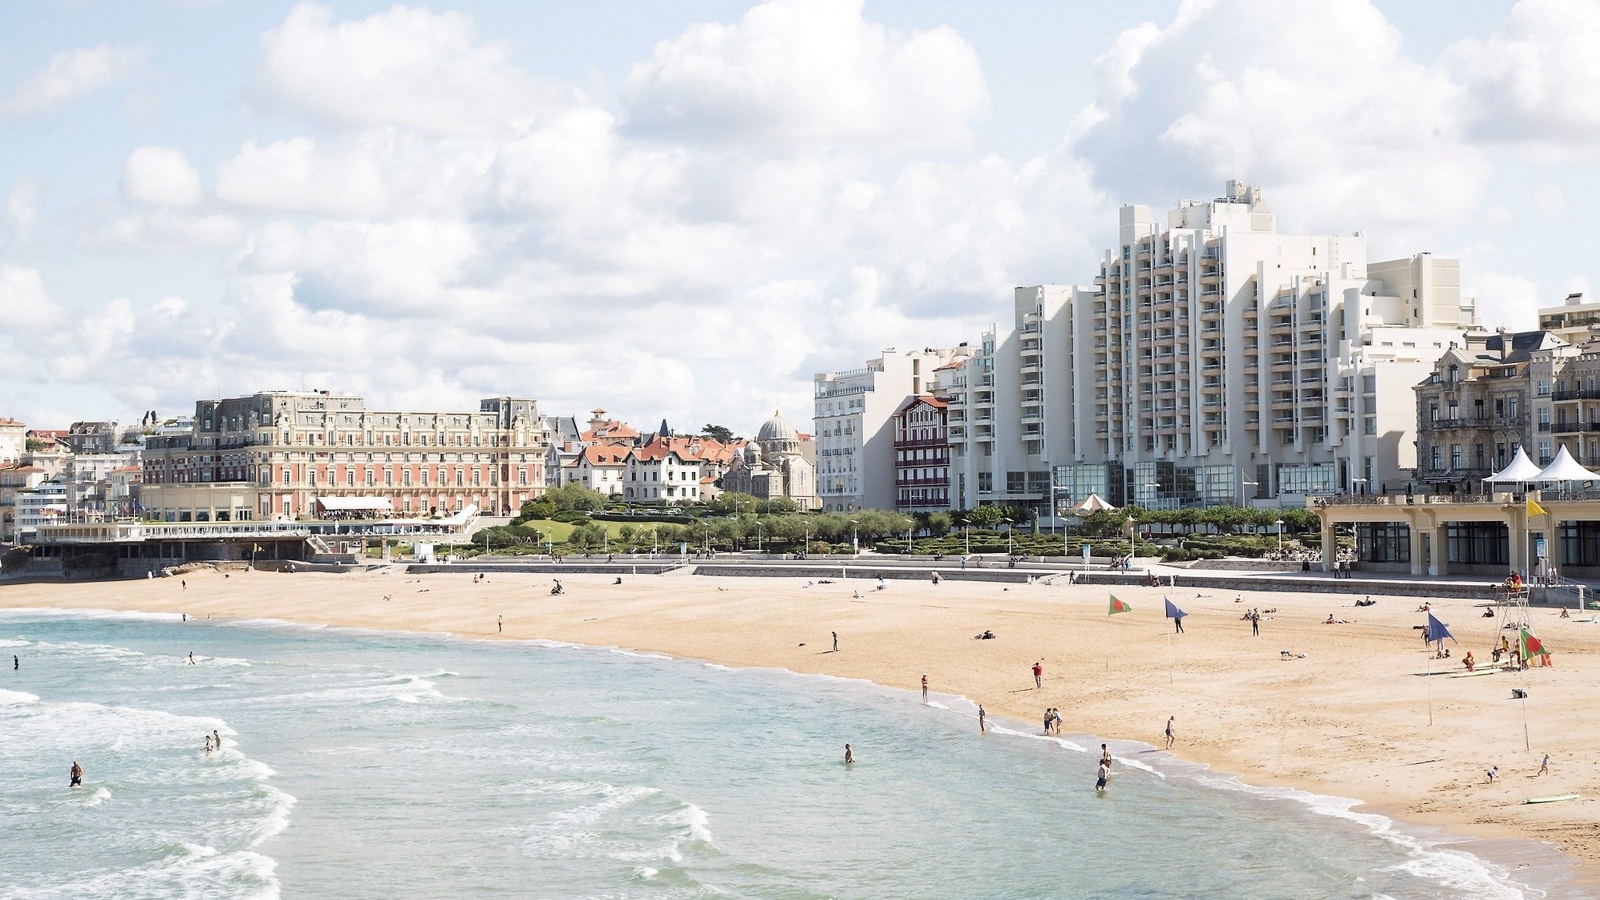 Stranden Grand plage ligger mitt i Biarritz.
Foto: Linda Romppala